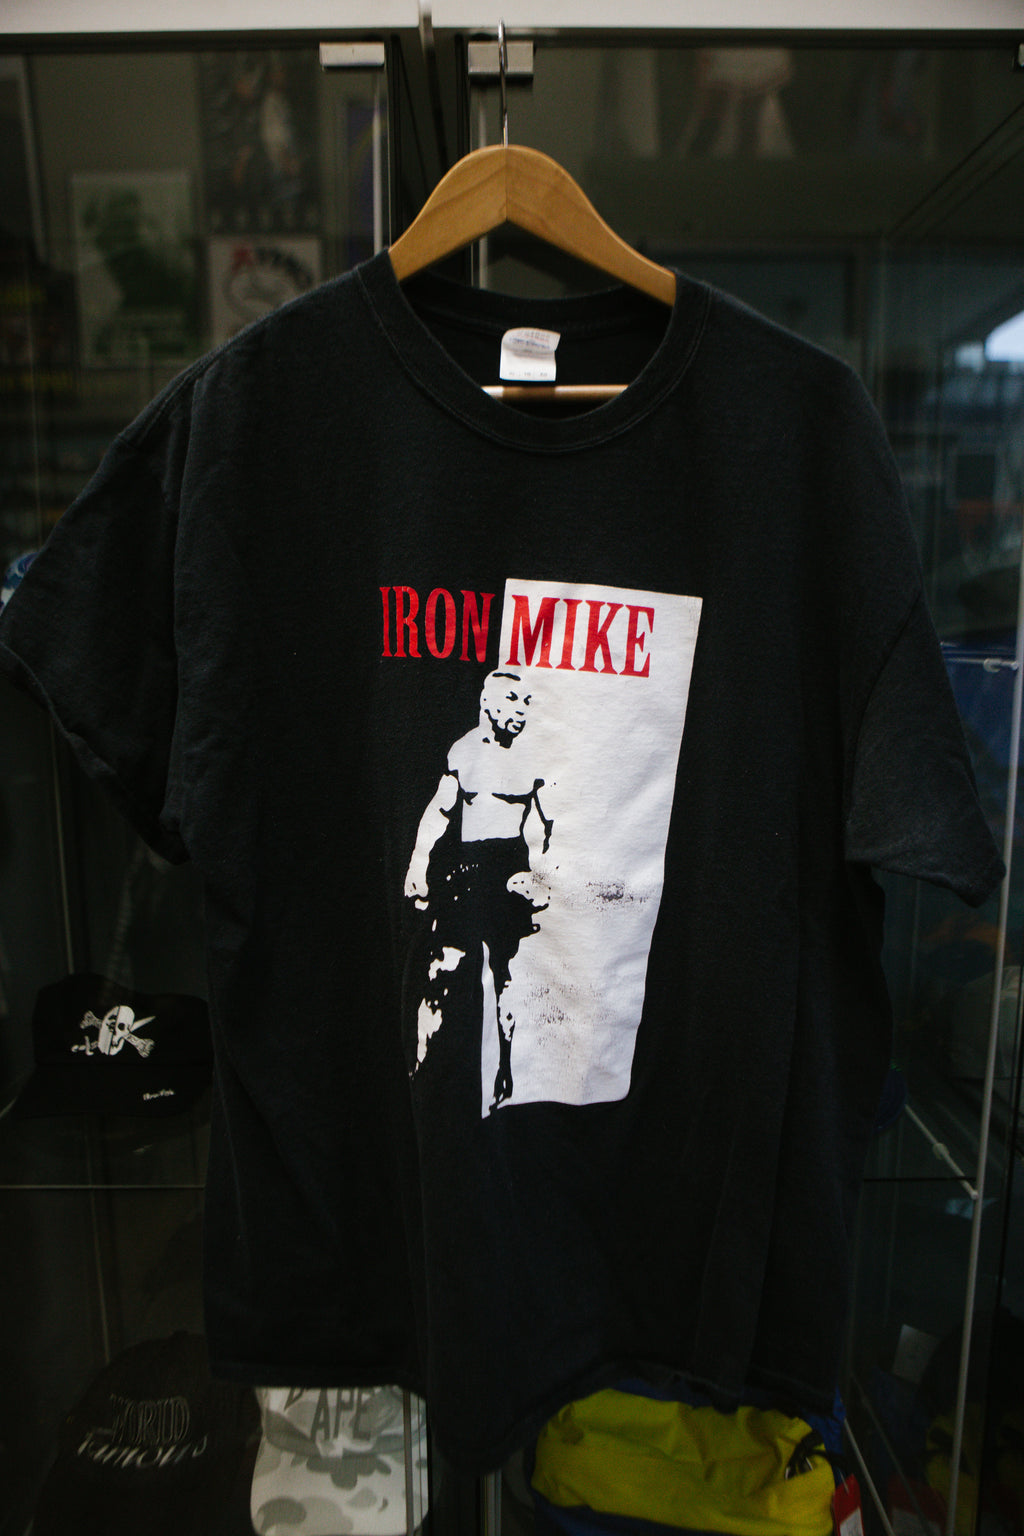 Mike Tyson “Iron Mike” Tee